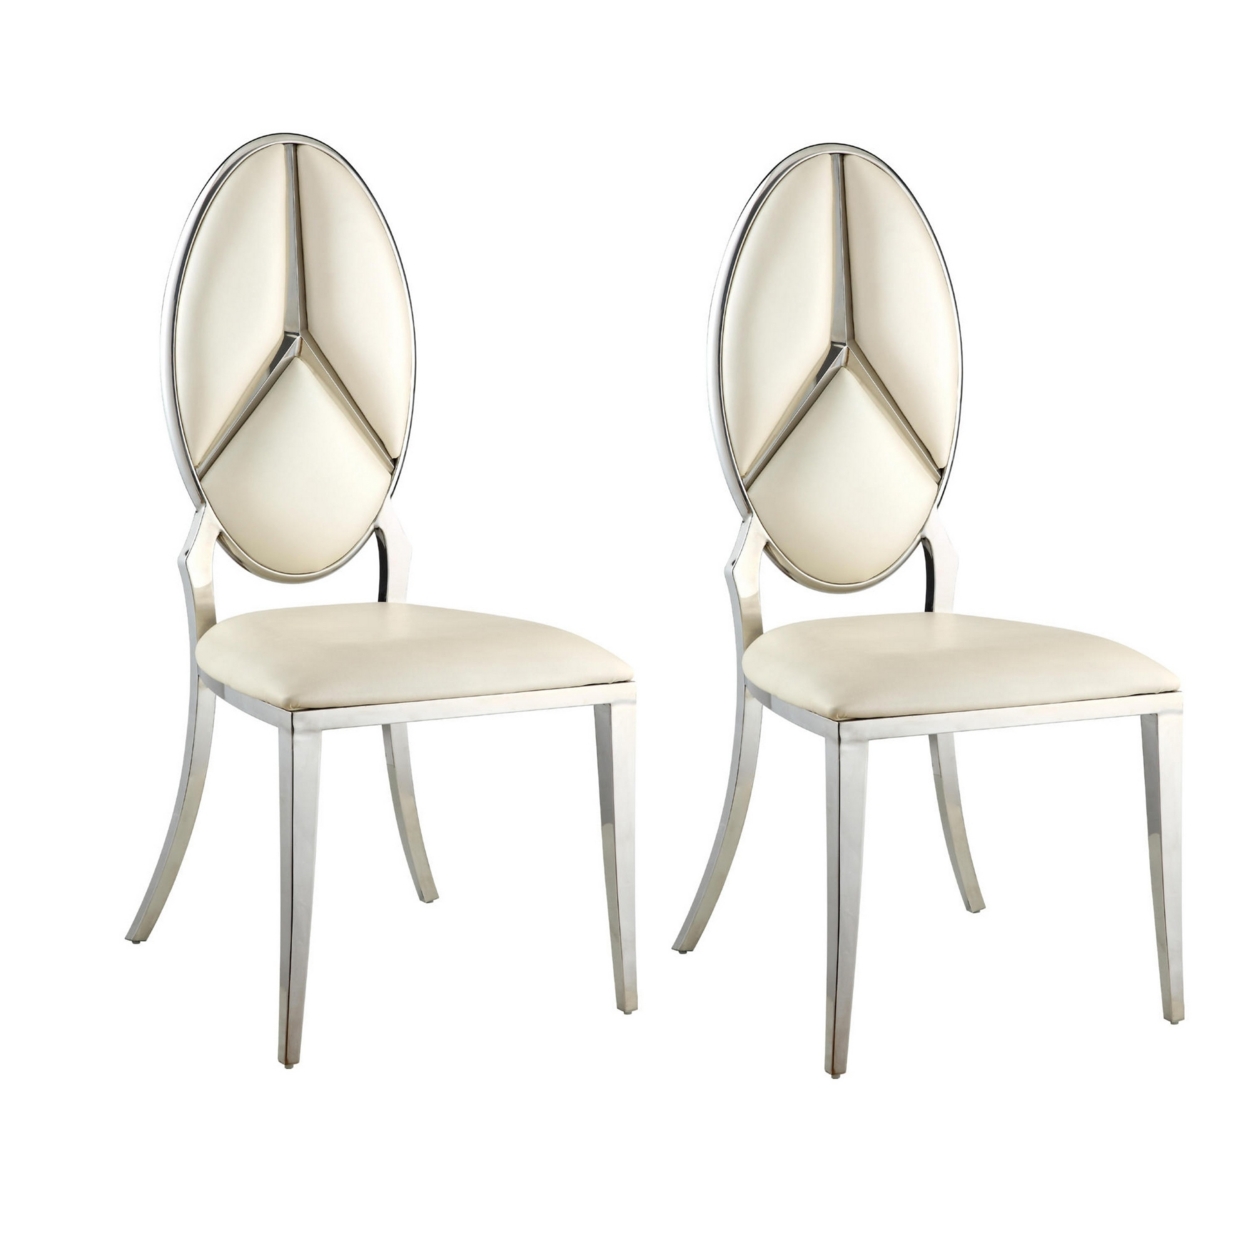 Kuri 20 Inch Modern Dining Chair, Vegan Leather, Set Of 2, White, Chrome- Saltoro Sherpi